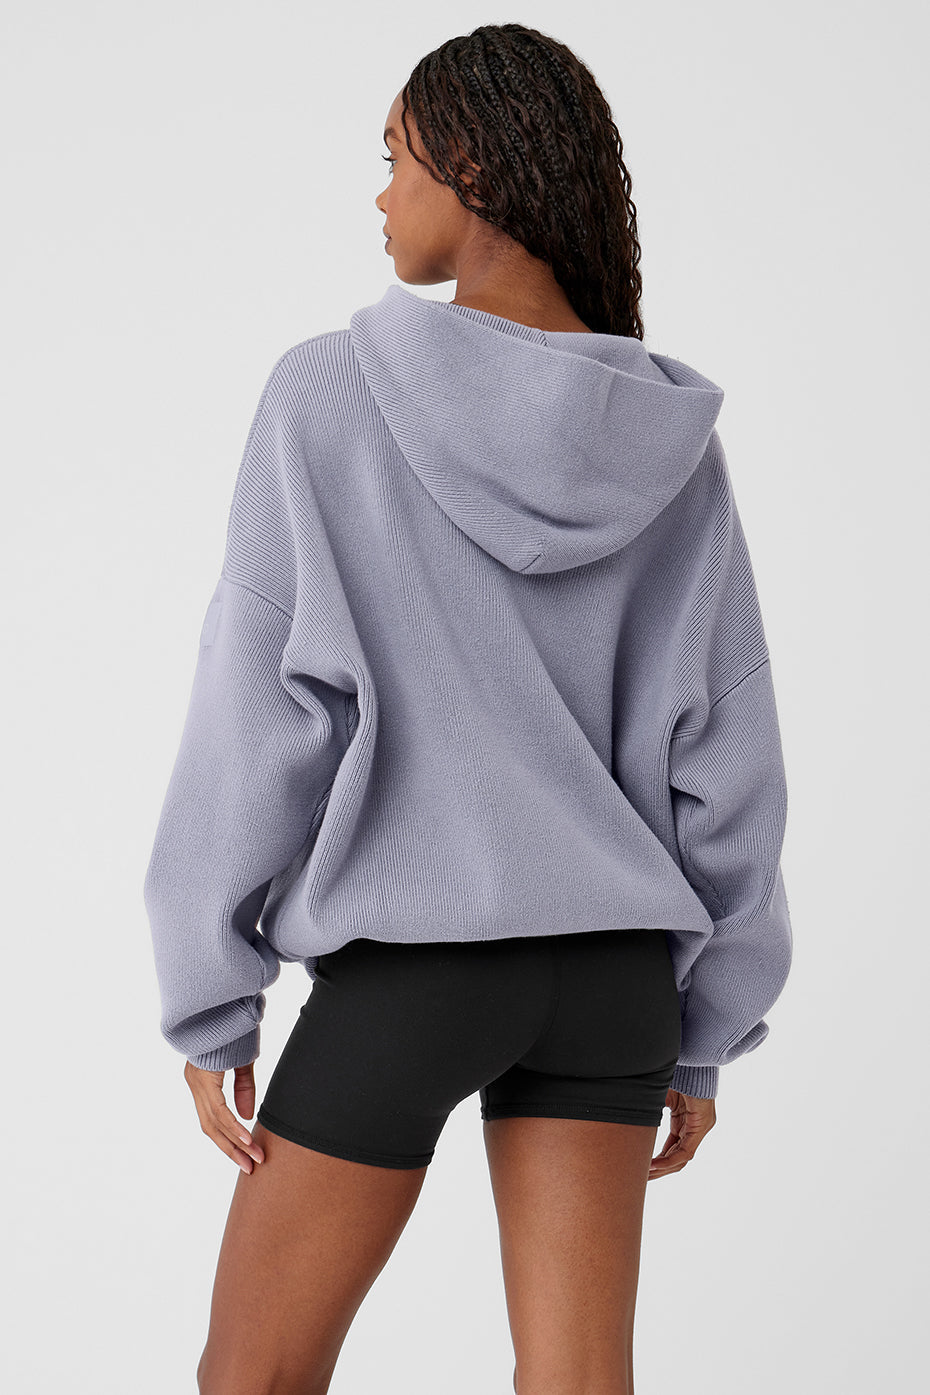 Scholar Hooded Sweater - Fog – Aloyoga